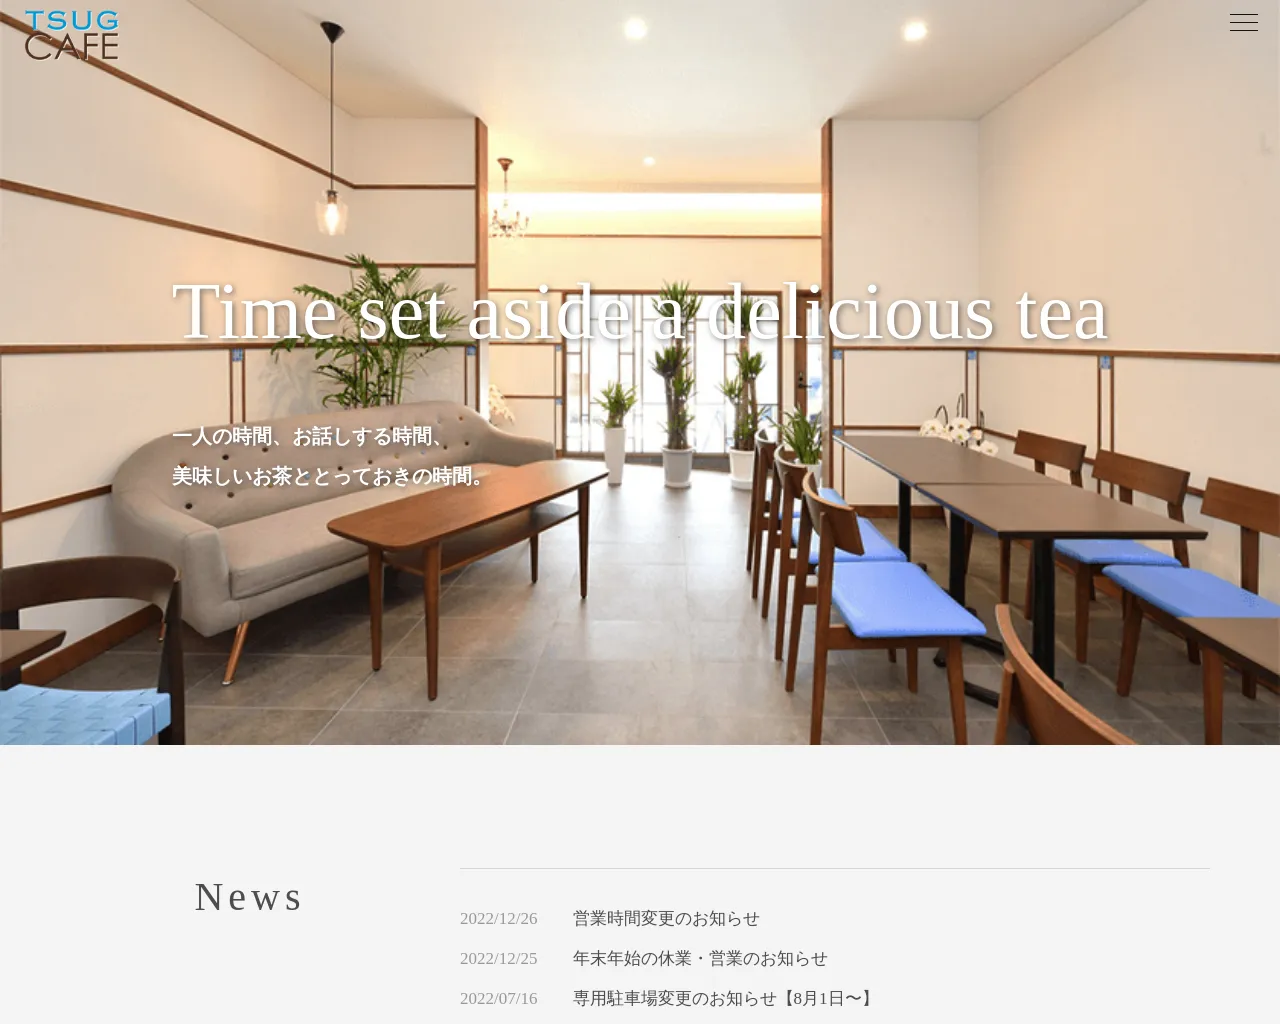 TSUG CAFE site